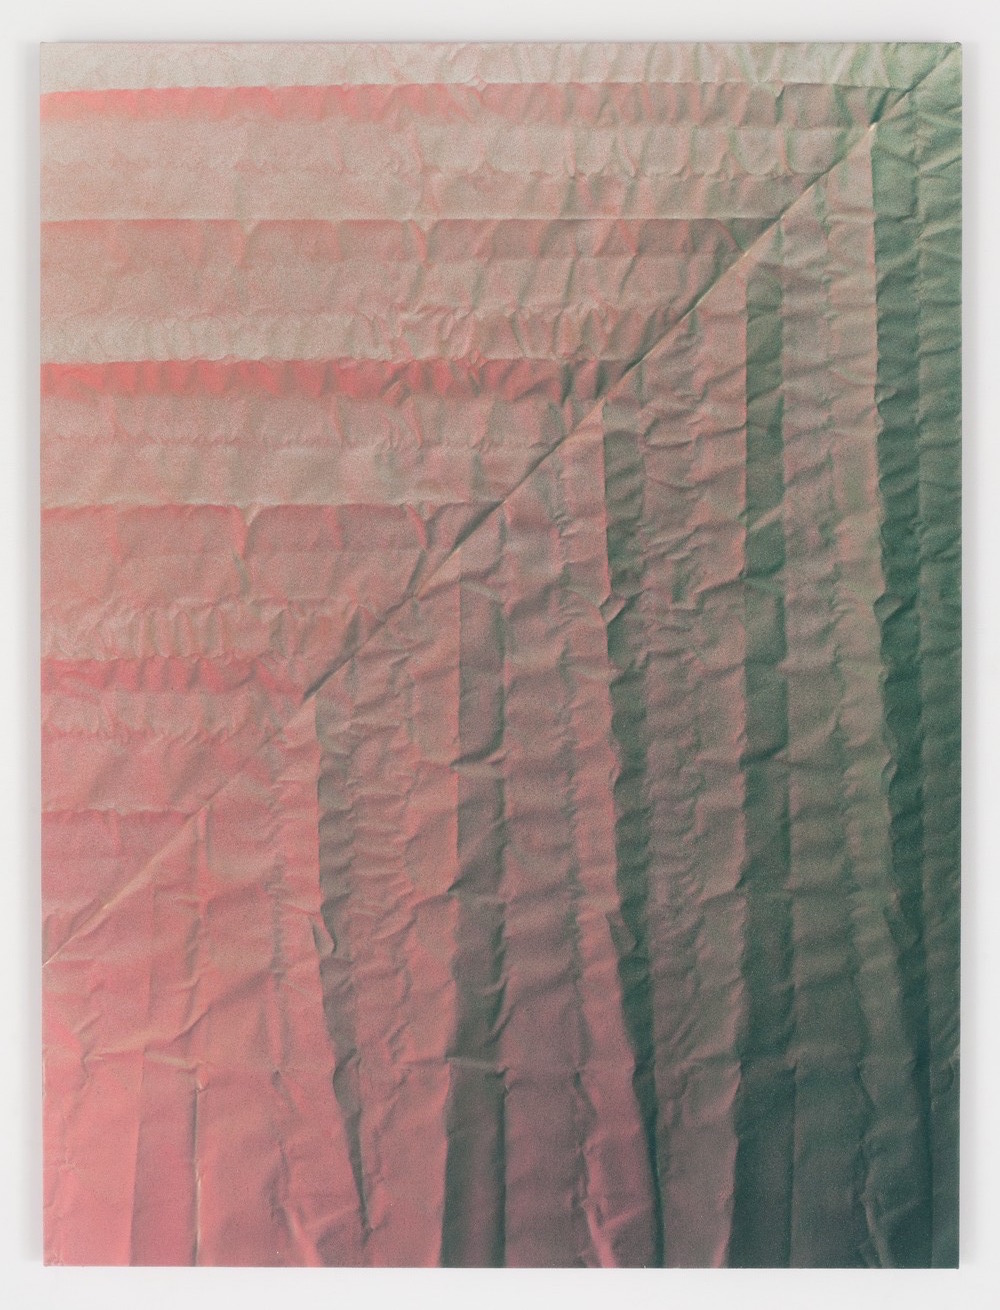 0376 Untitled (Fold)-Tauba-Auerbach-large.jpg